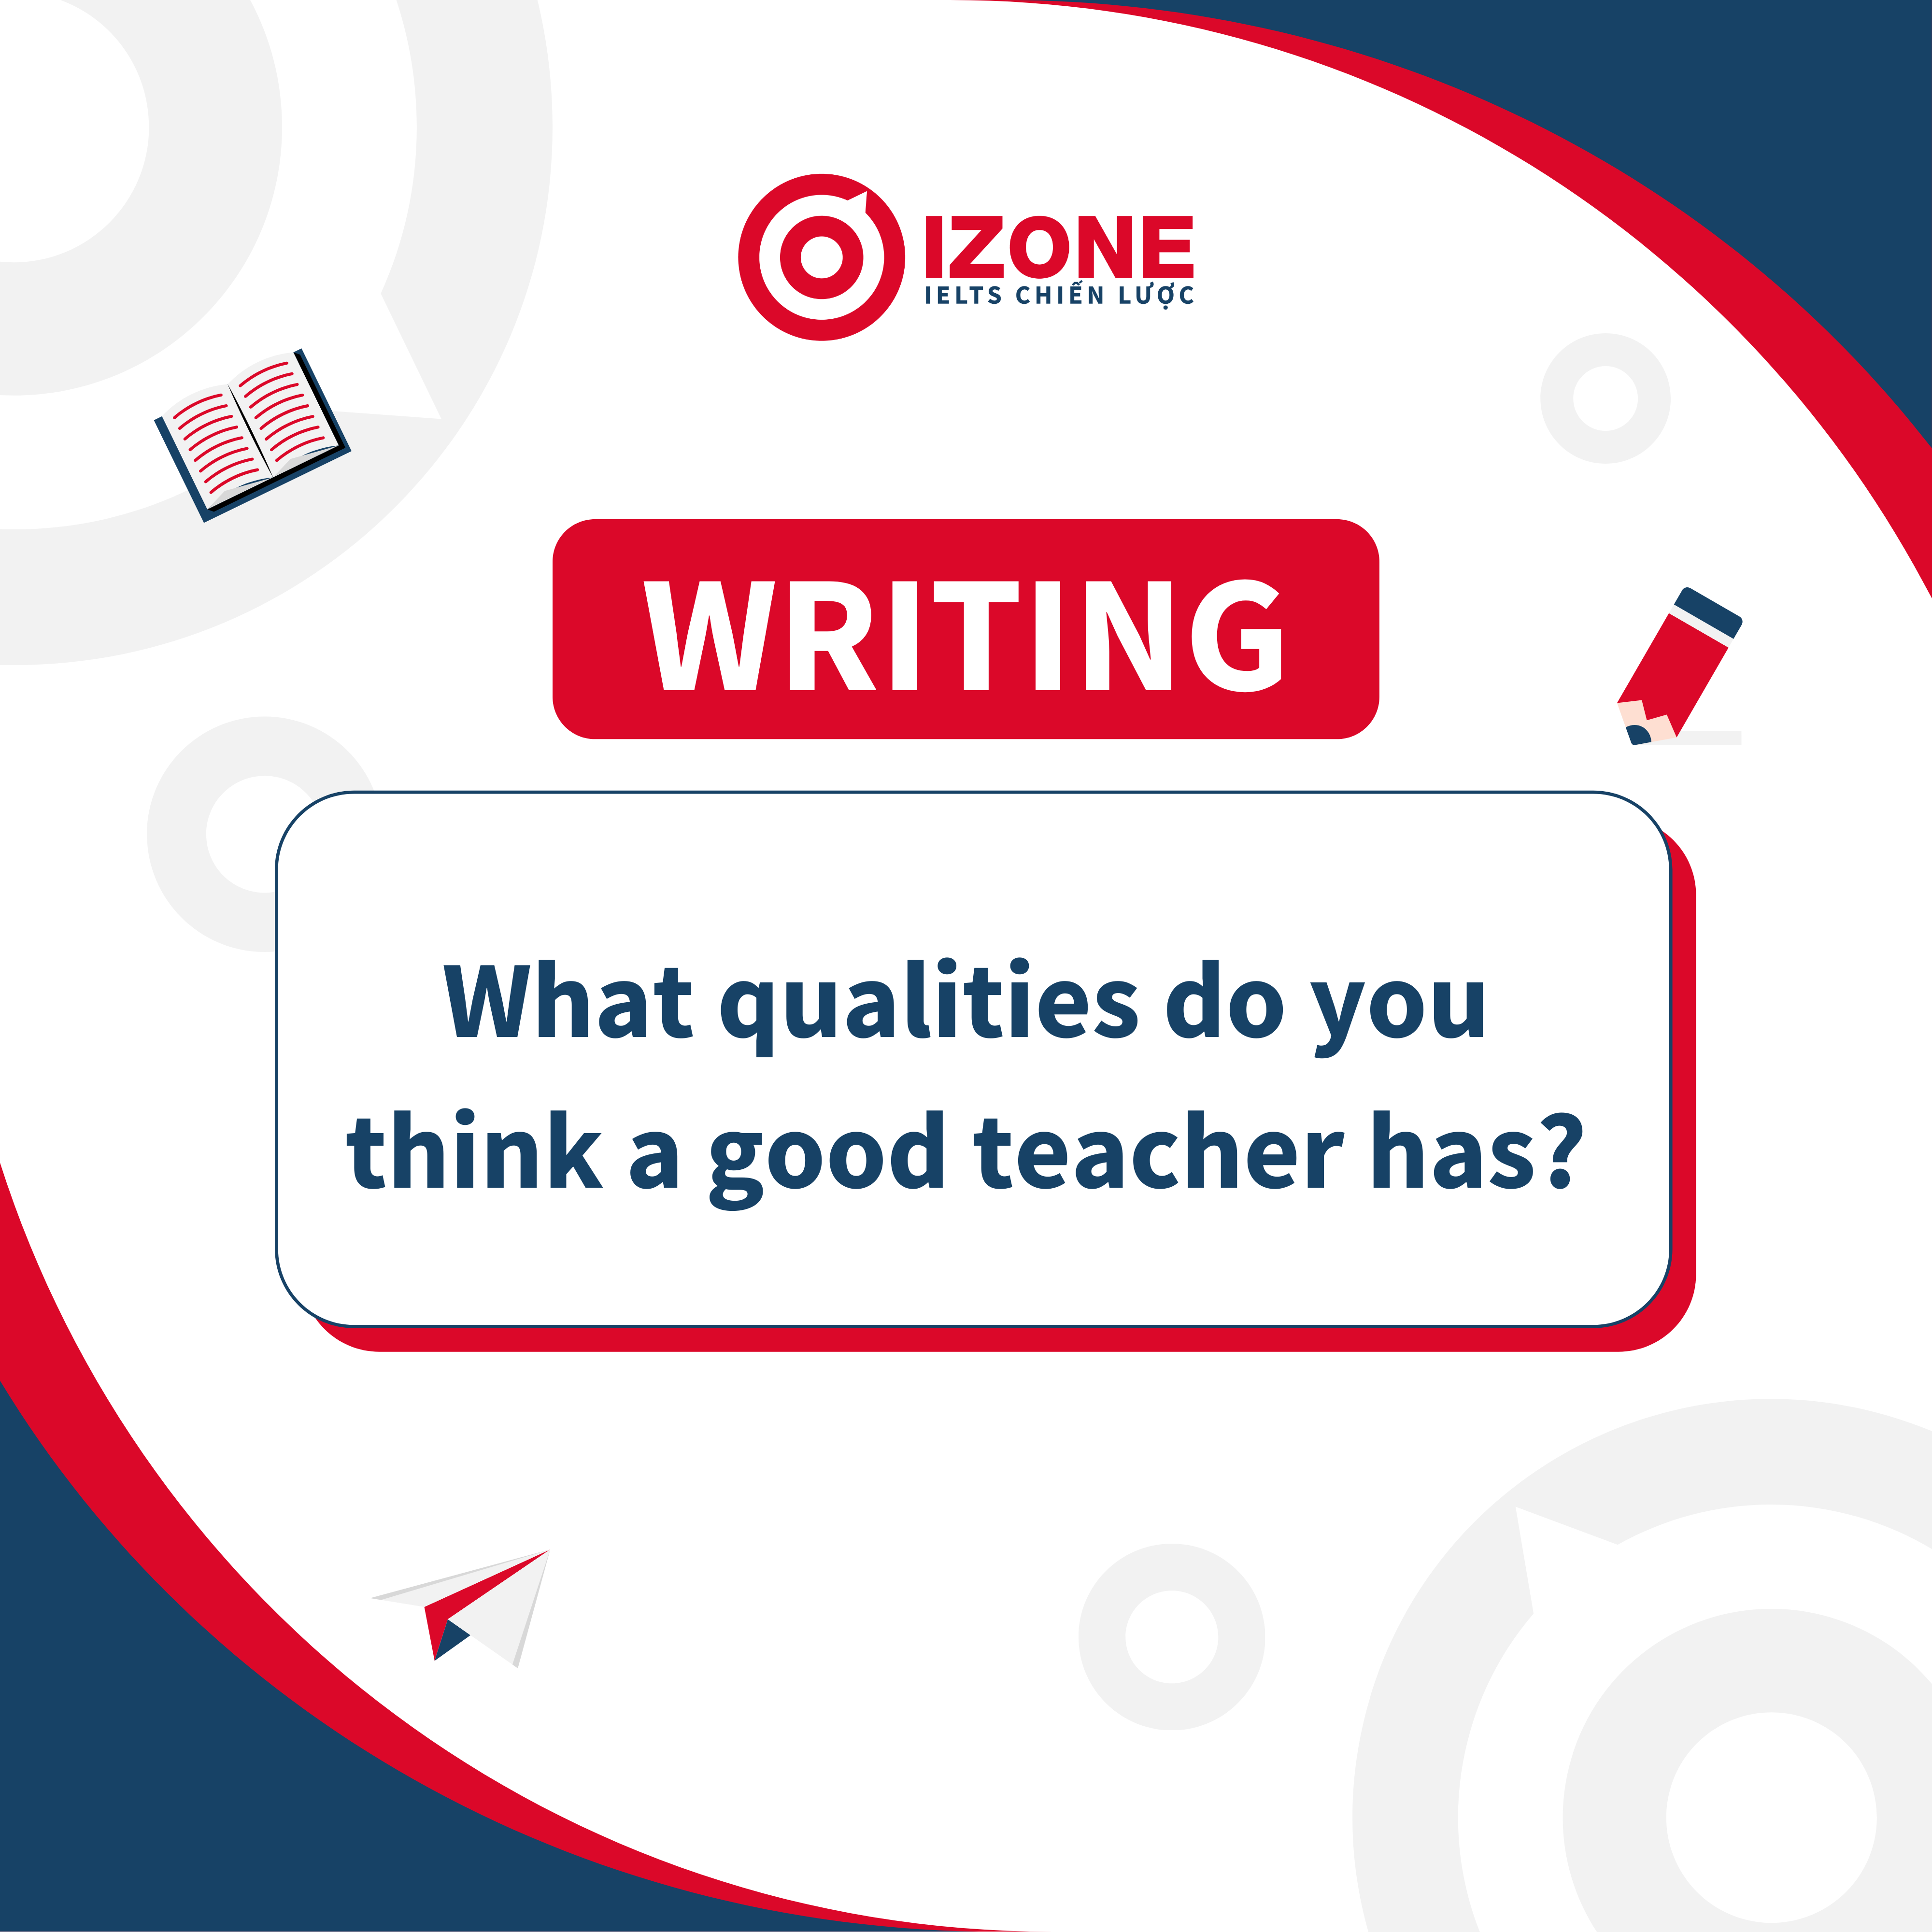 Cách Triển Khai Câu Hỏi “What qualities do you think a good teacher has?”